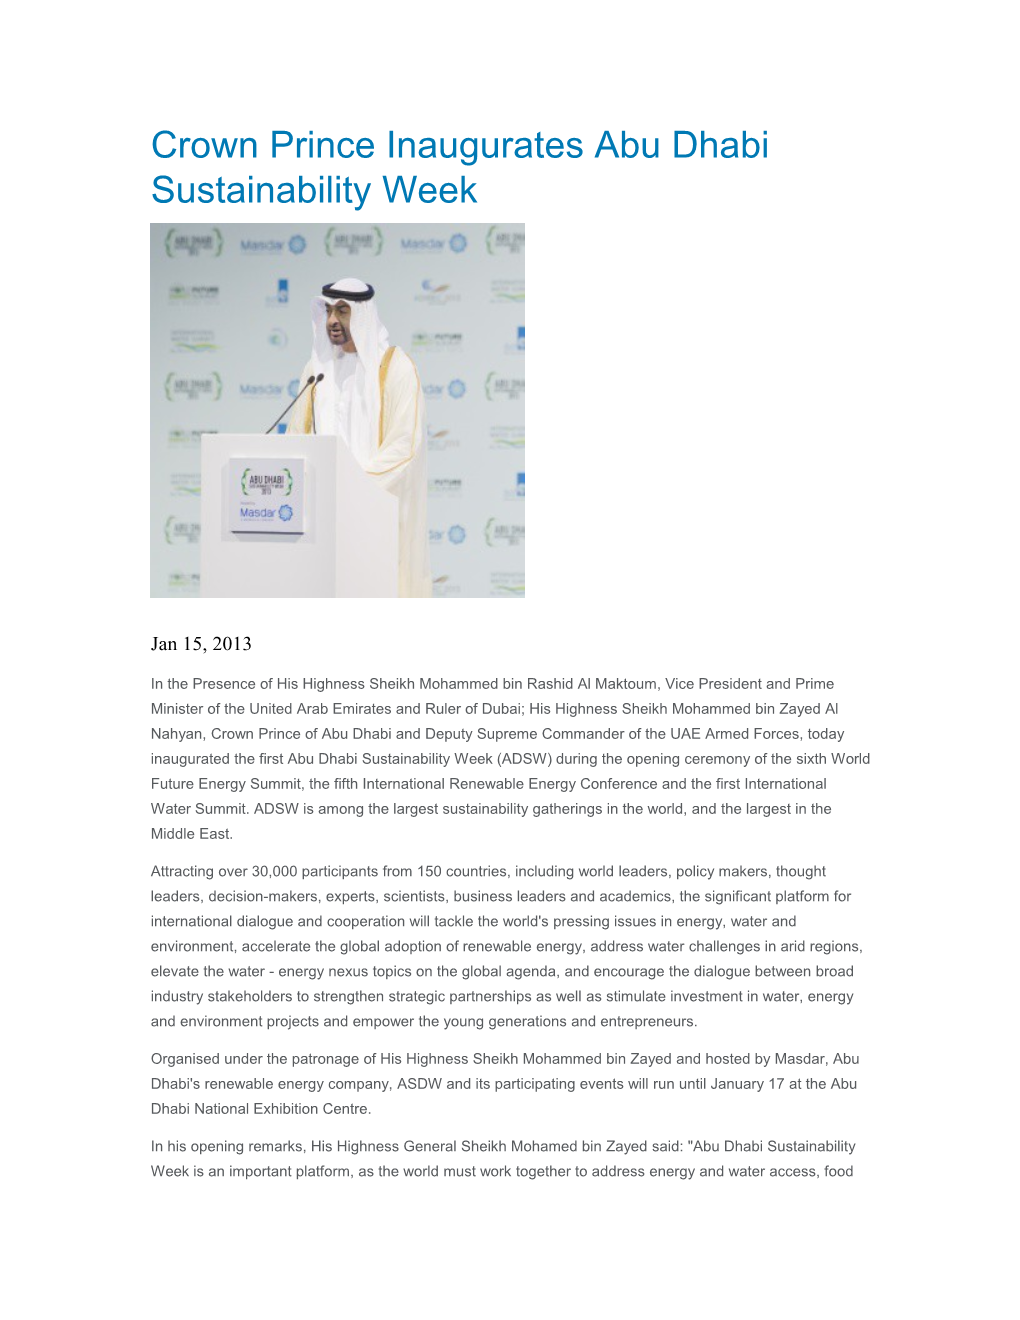 Crown Prince Inaugurates Abu Dhabi Sustainability Week